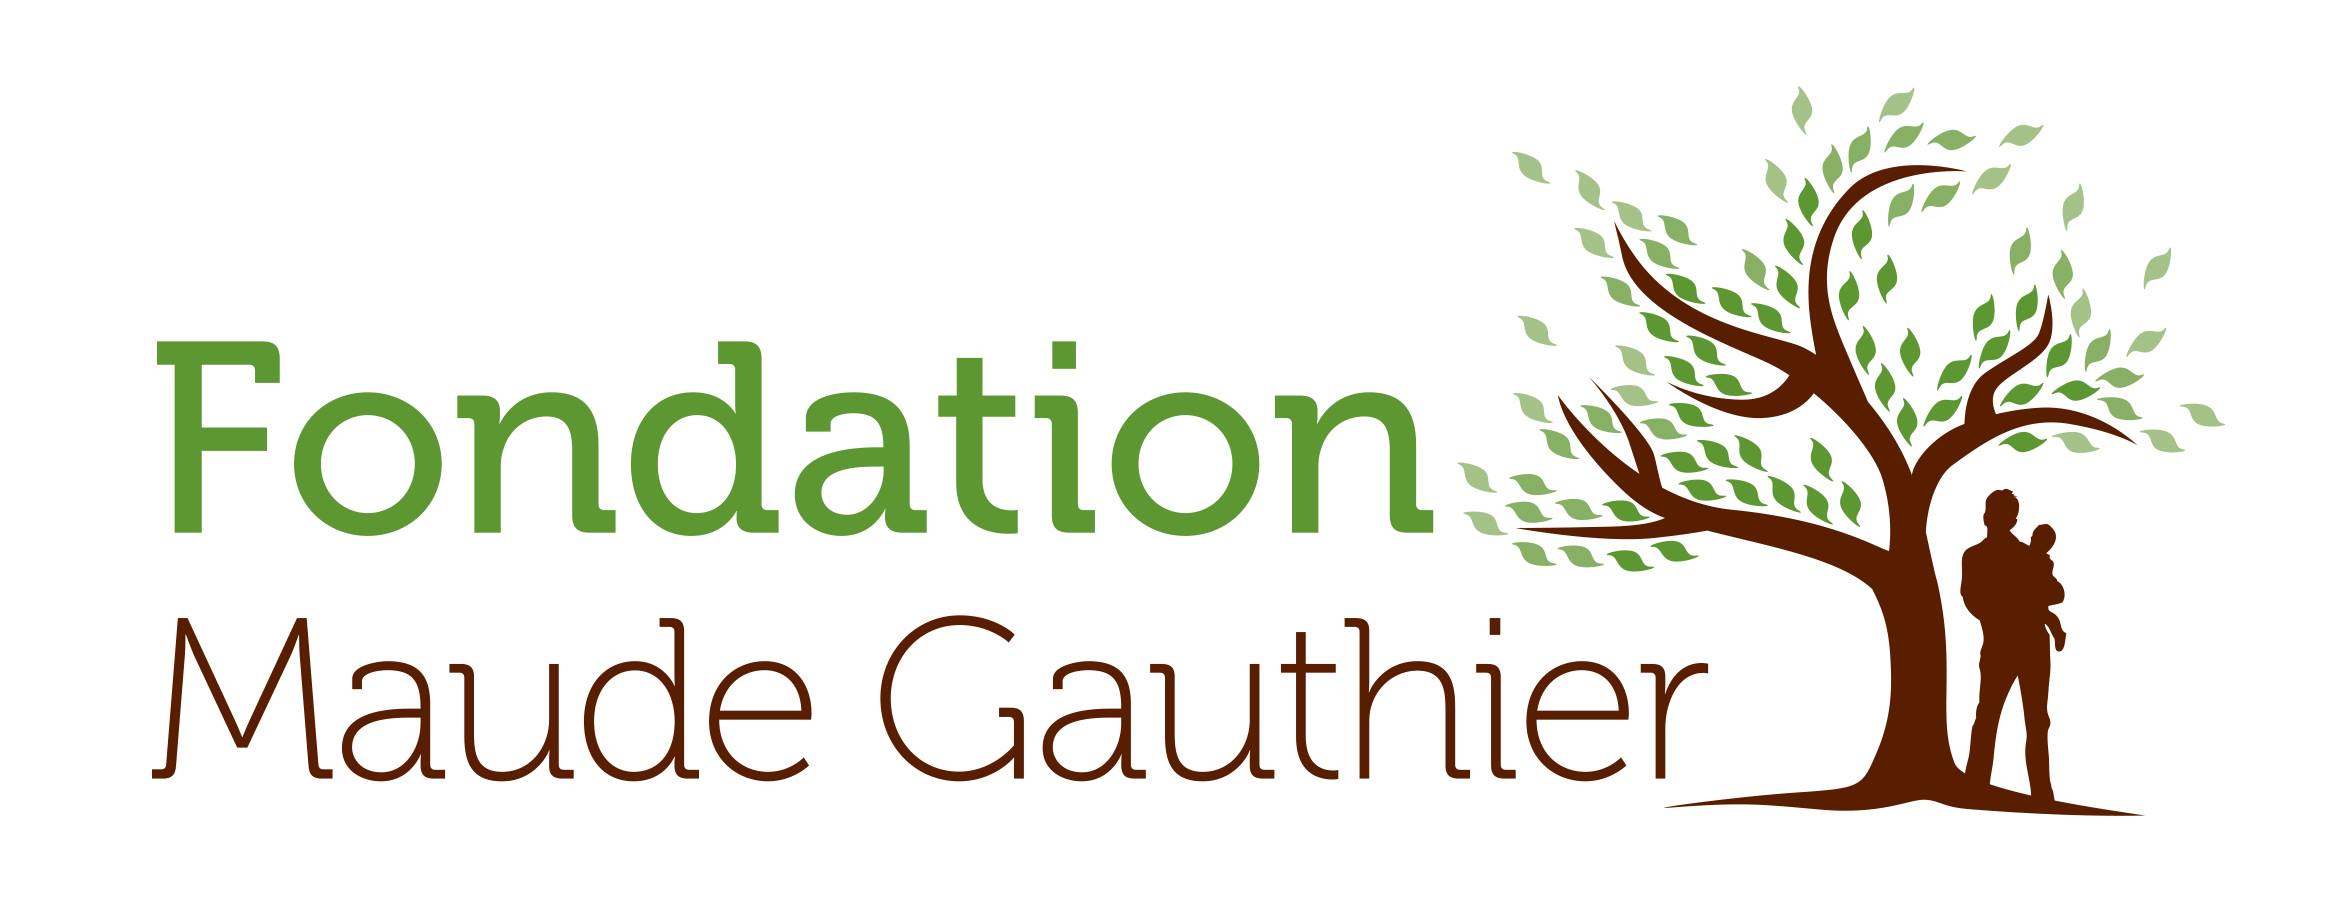 Fondation-Maude-Gauthier